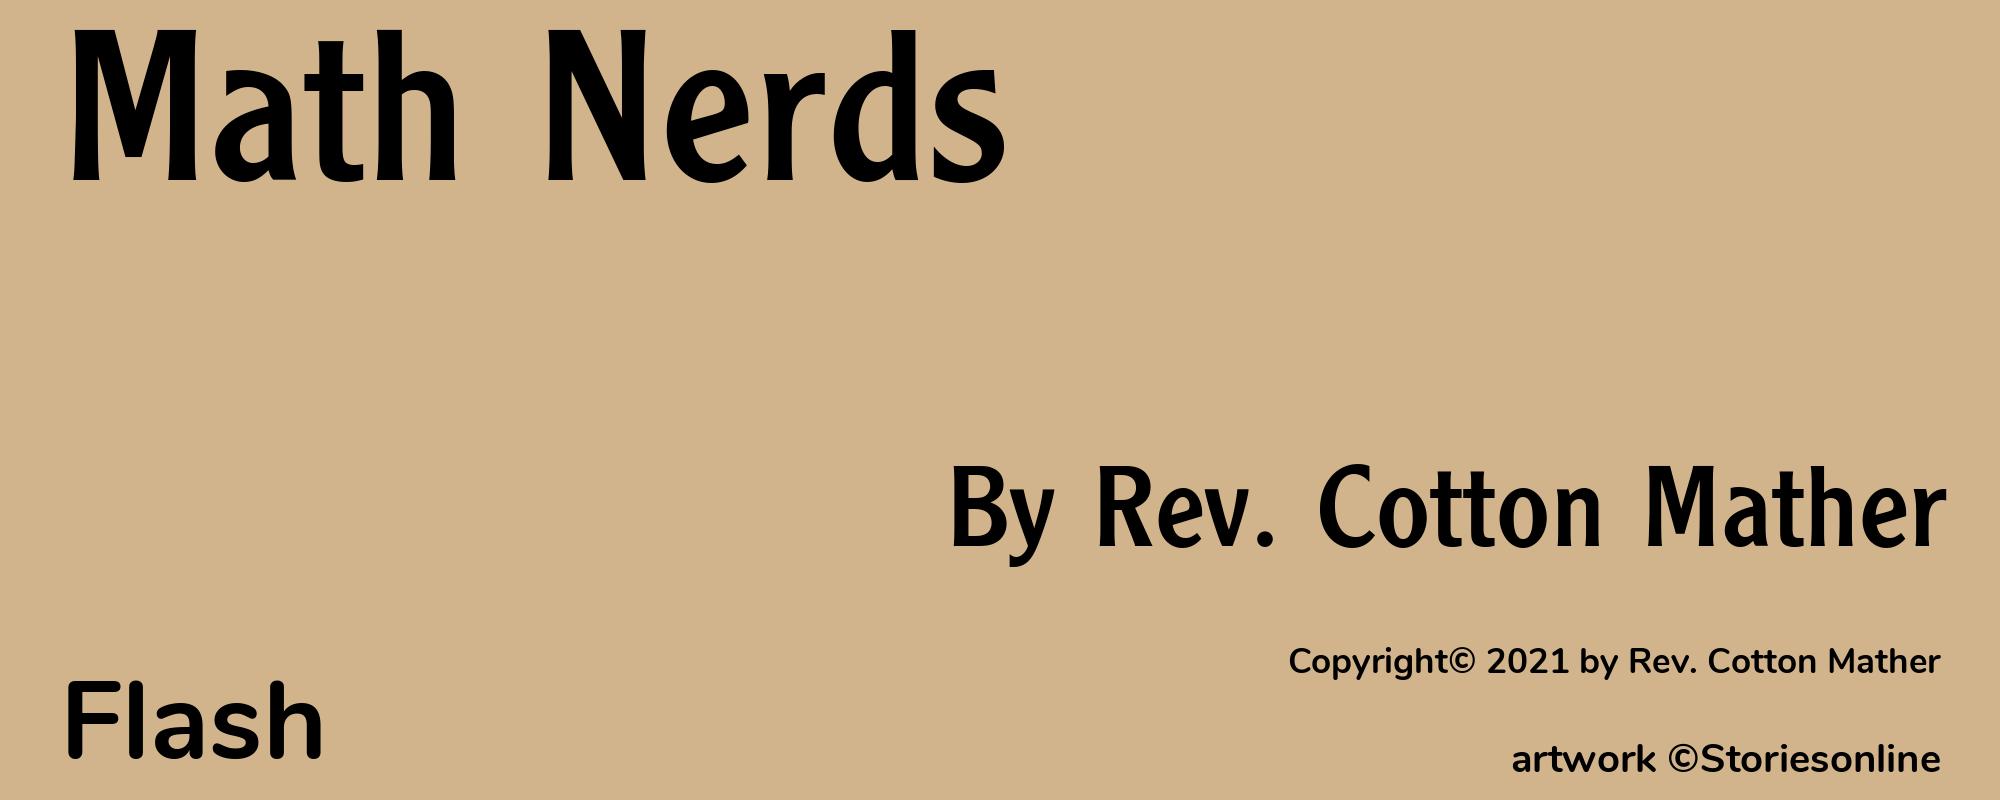 Math Nerds - Cover